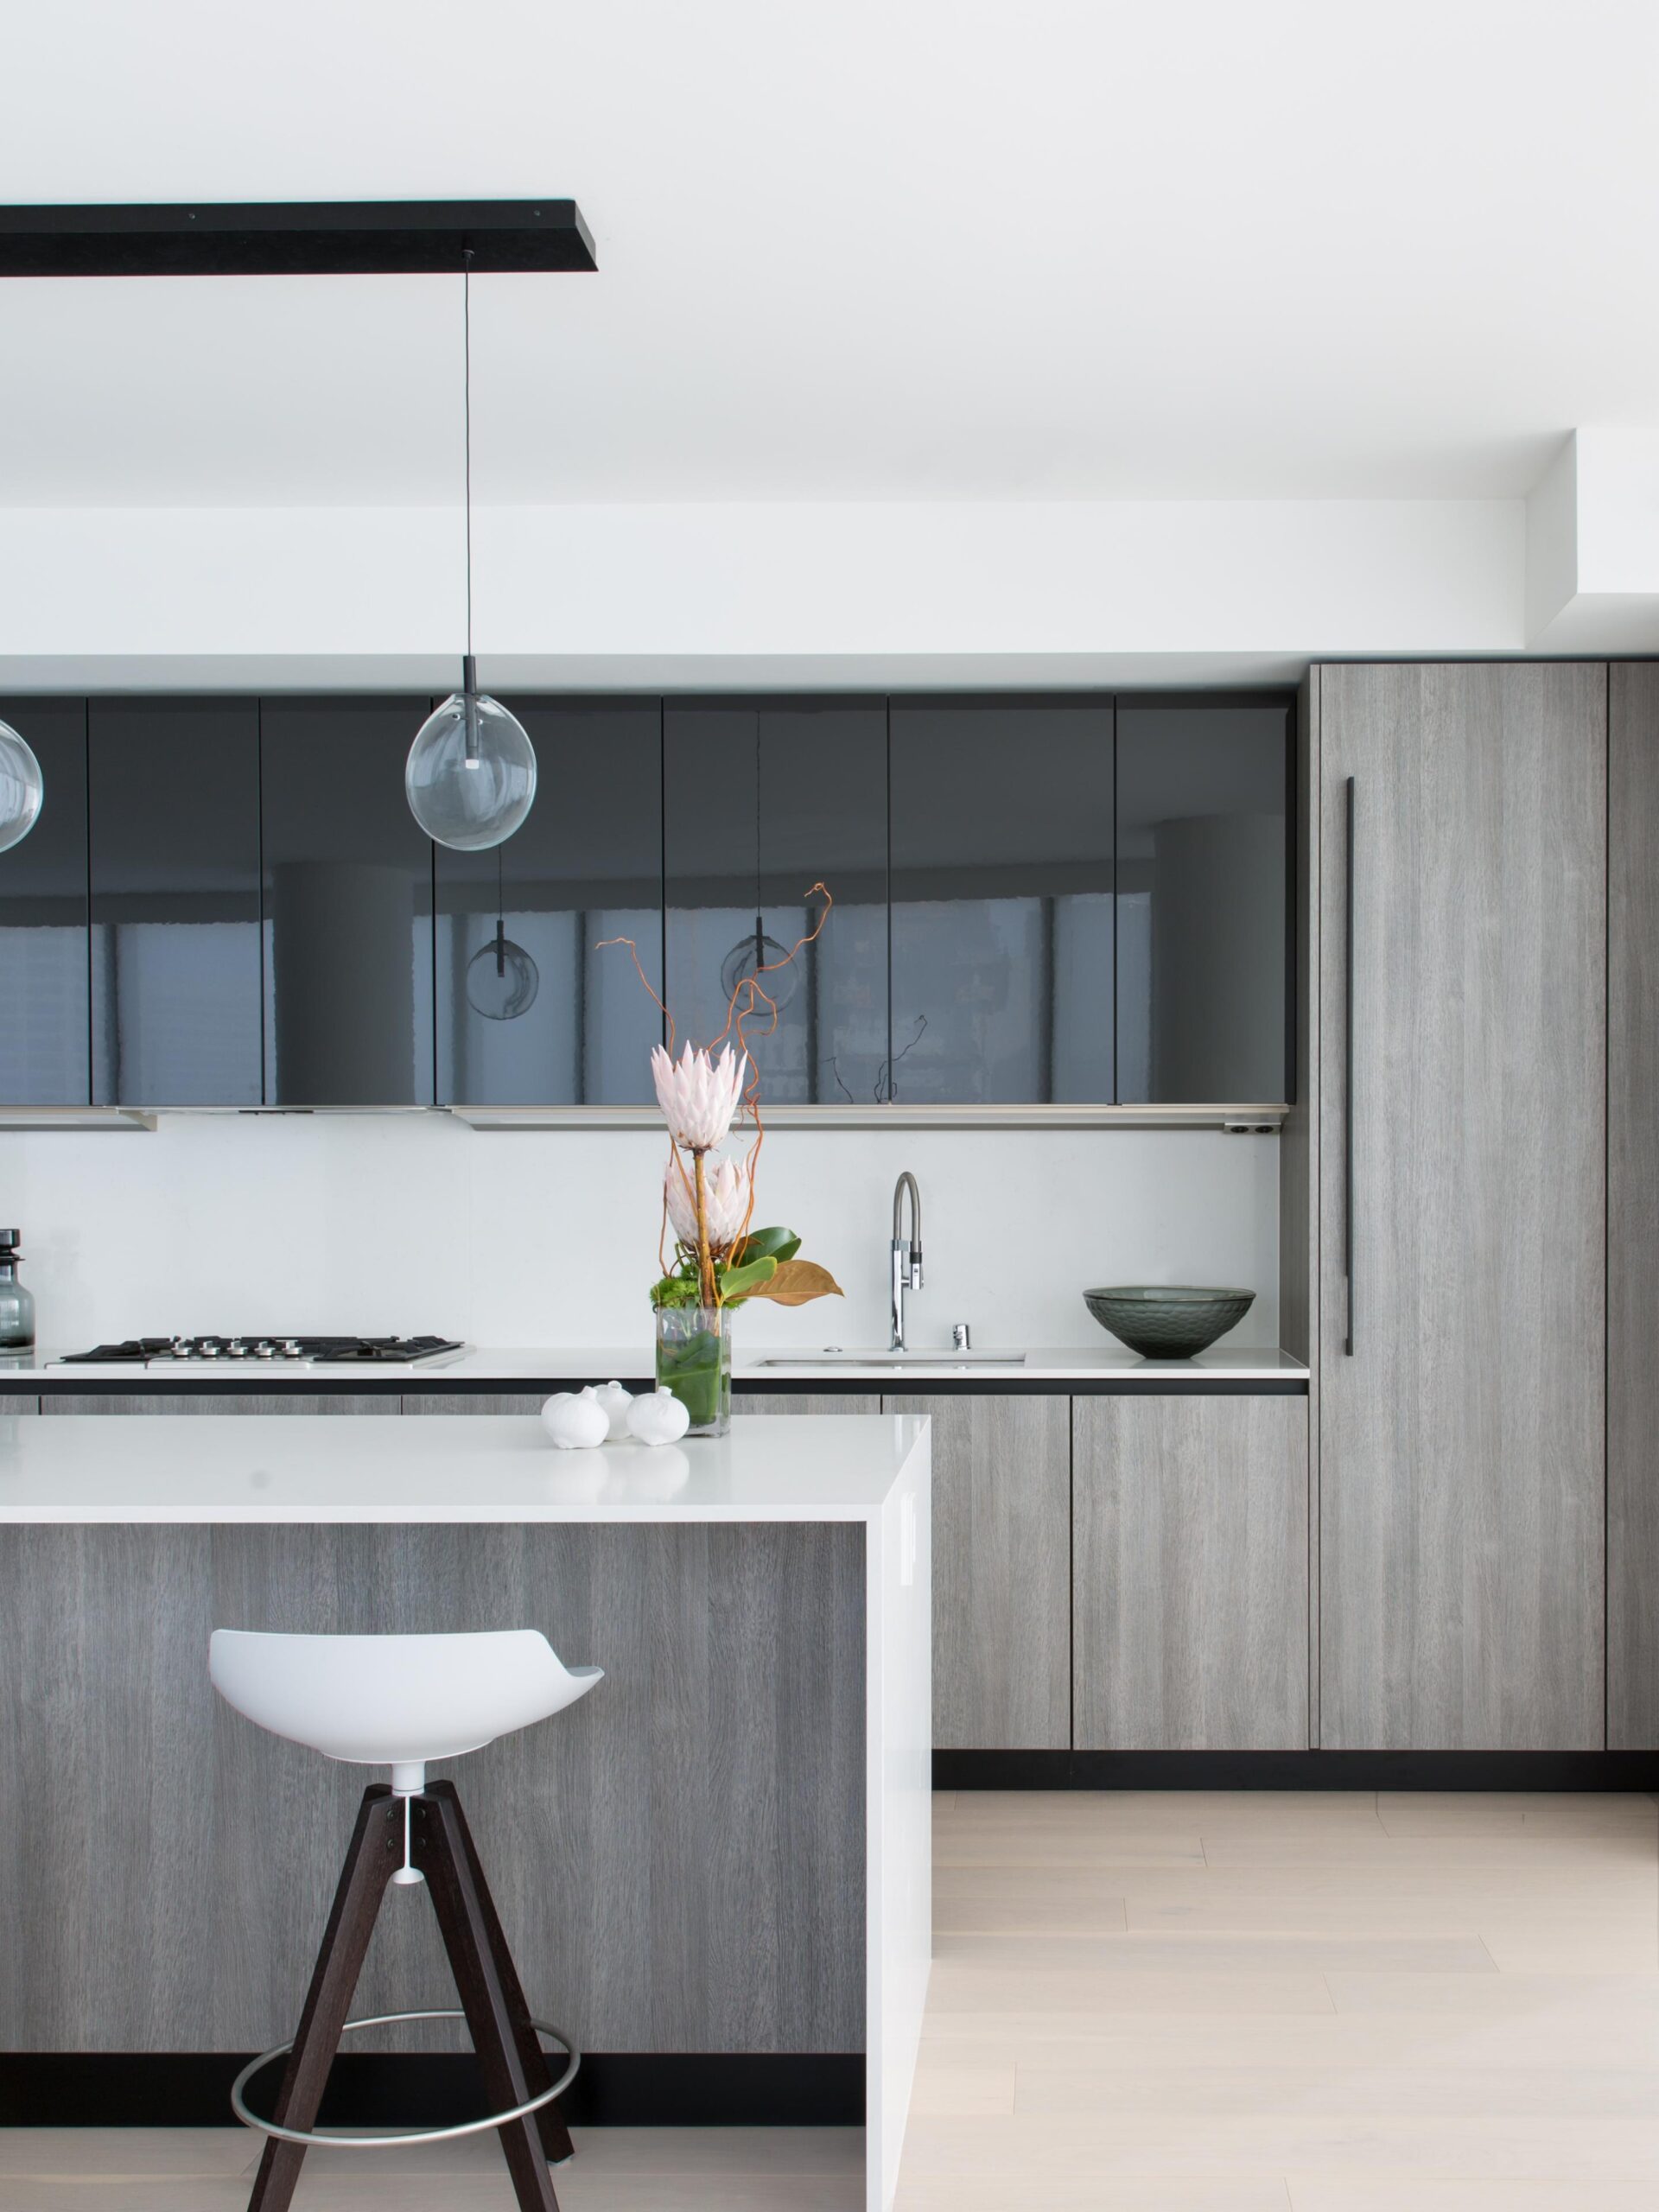 4 Sophisticated Gray Kitchen Ideas - Chic Gray Kitchens - grey kitchen designs